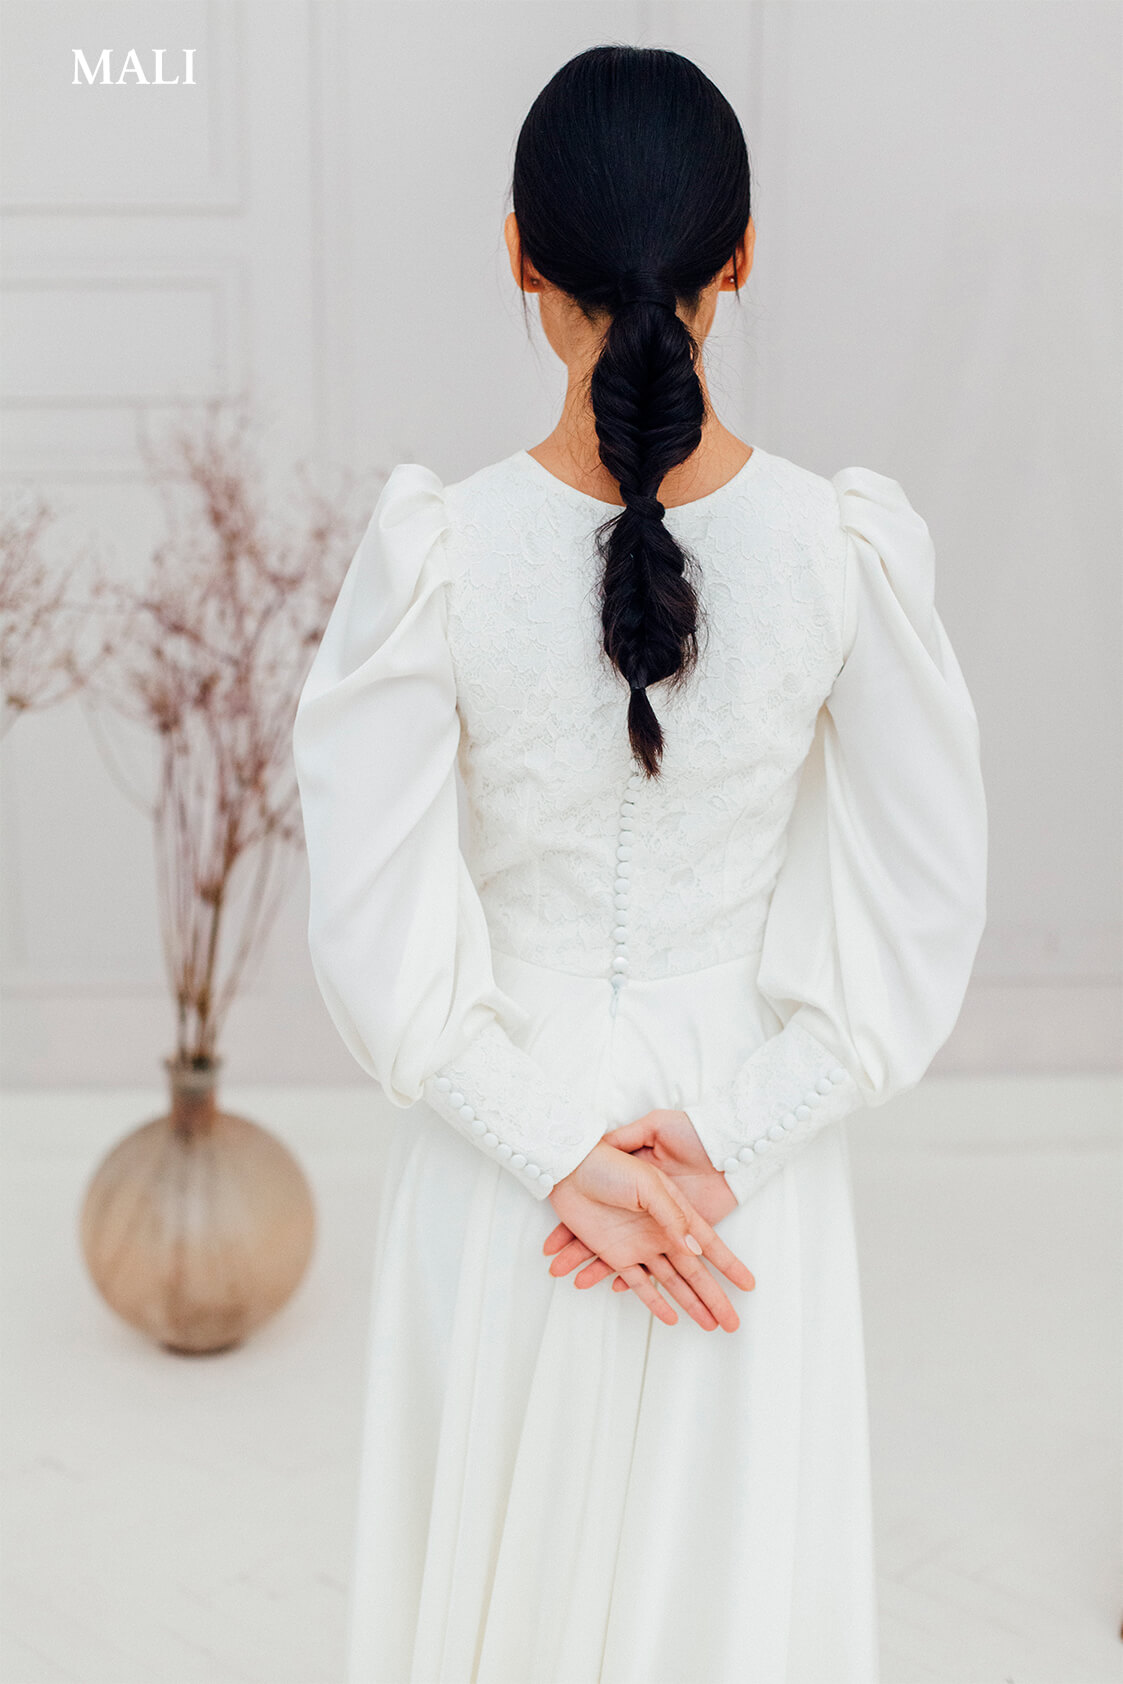 MALI - wedding dress "Refined Elegance" collection